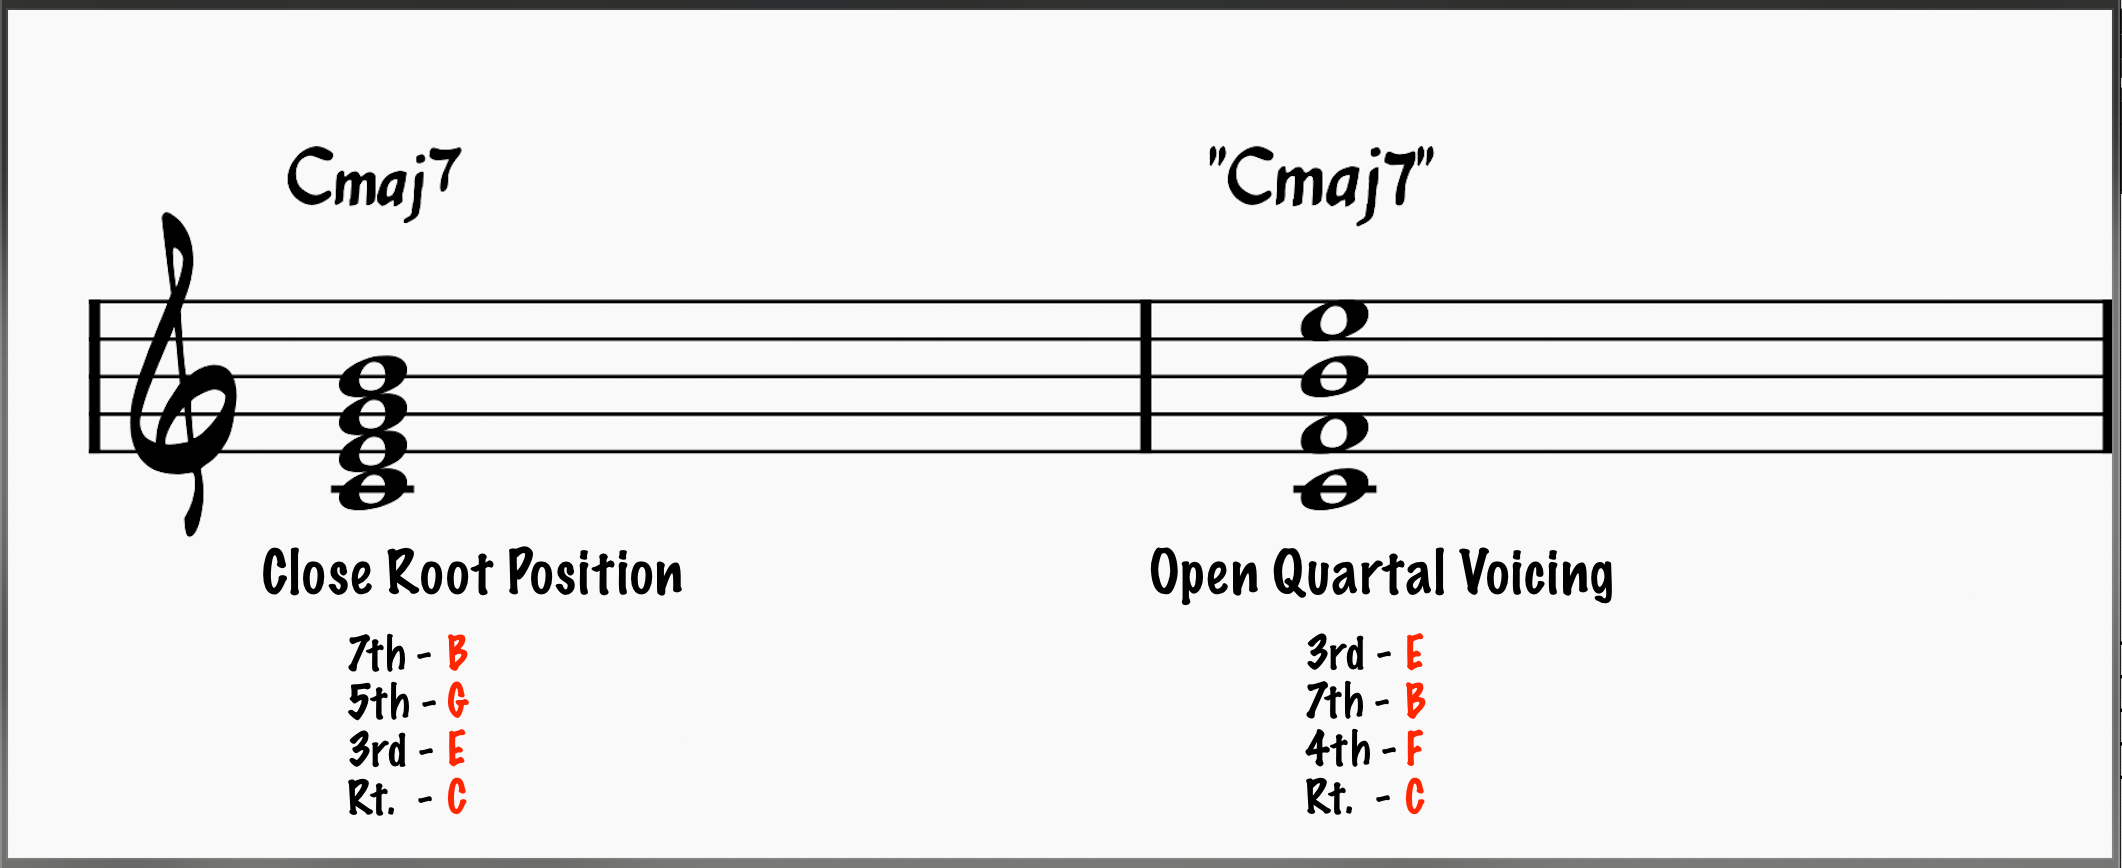 Cmaj7 in close root position and "Cmaj7" in open quartal voicing